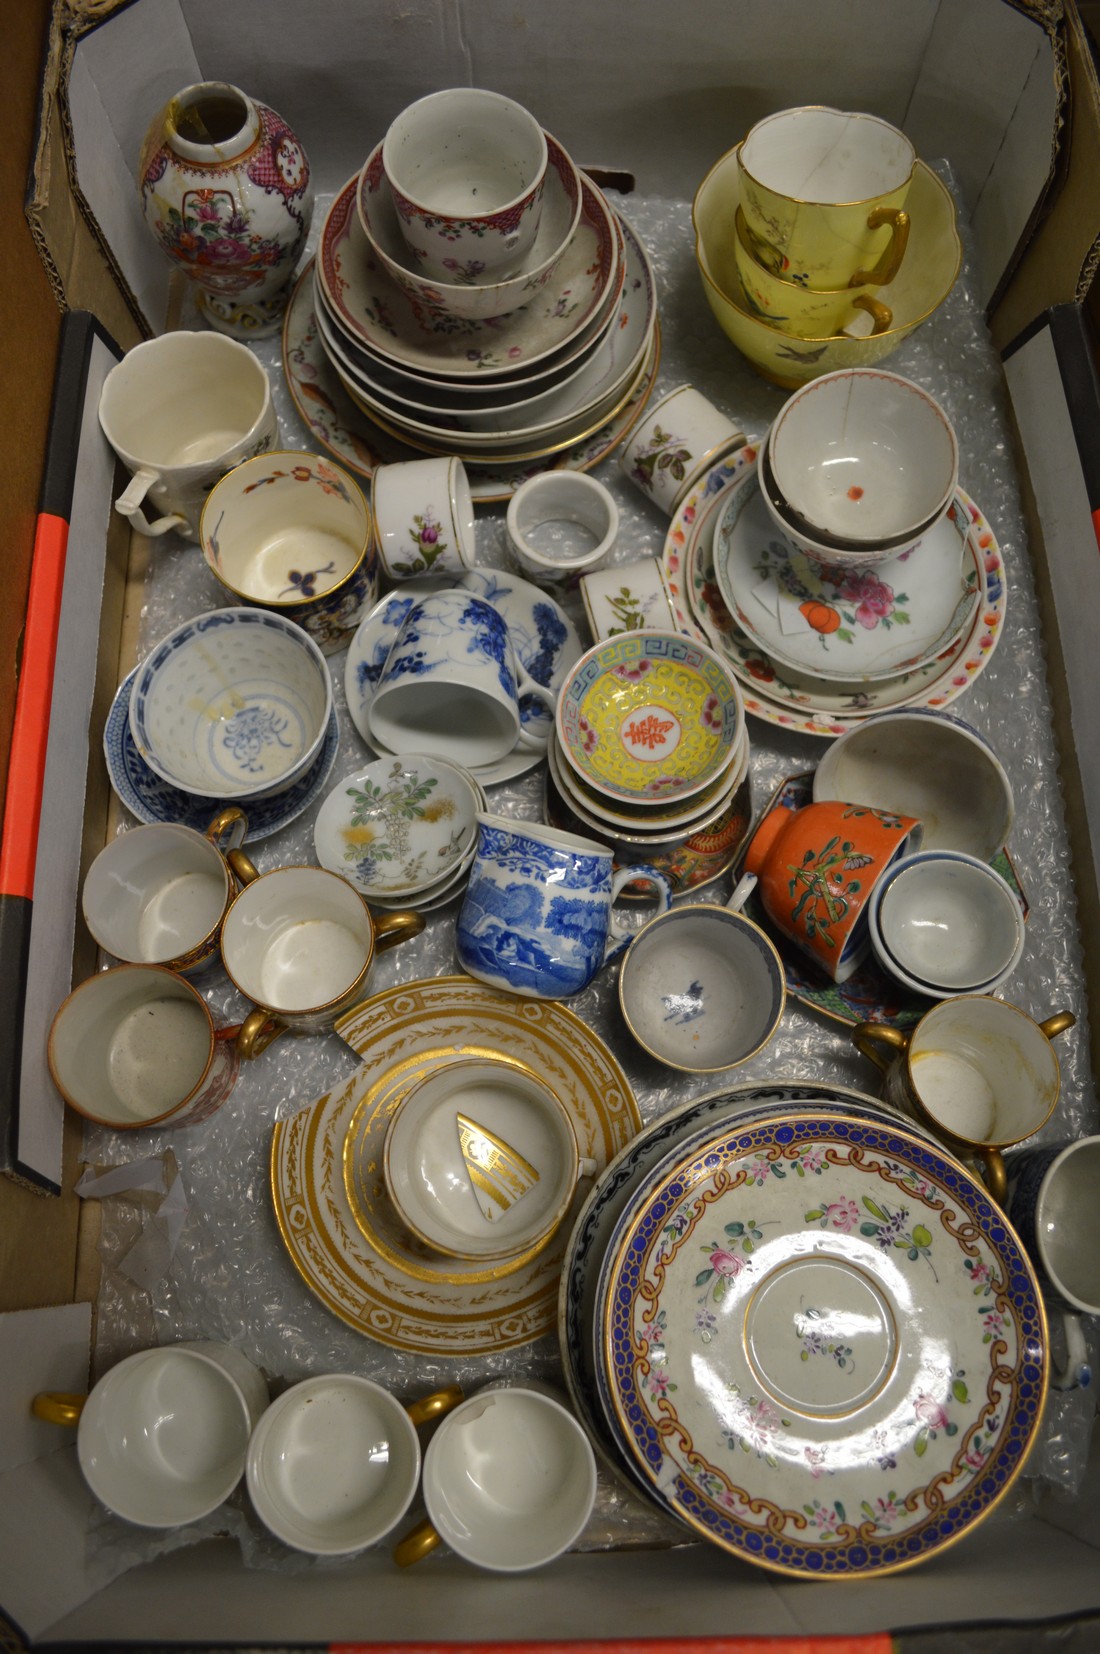 A collection of teacups, tea bowls, saucers etc.